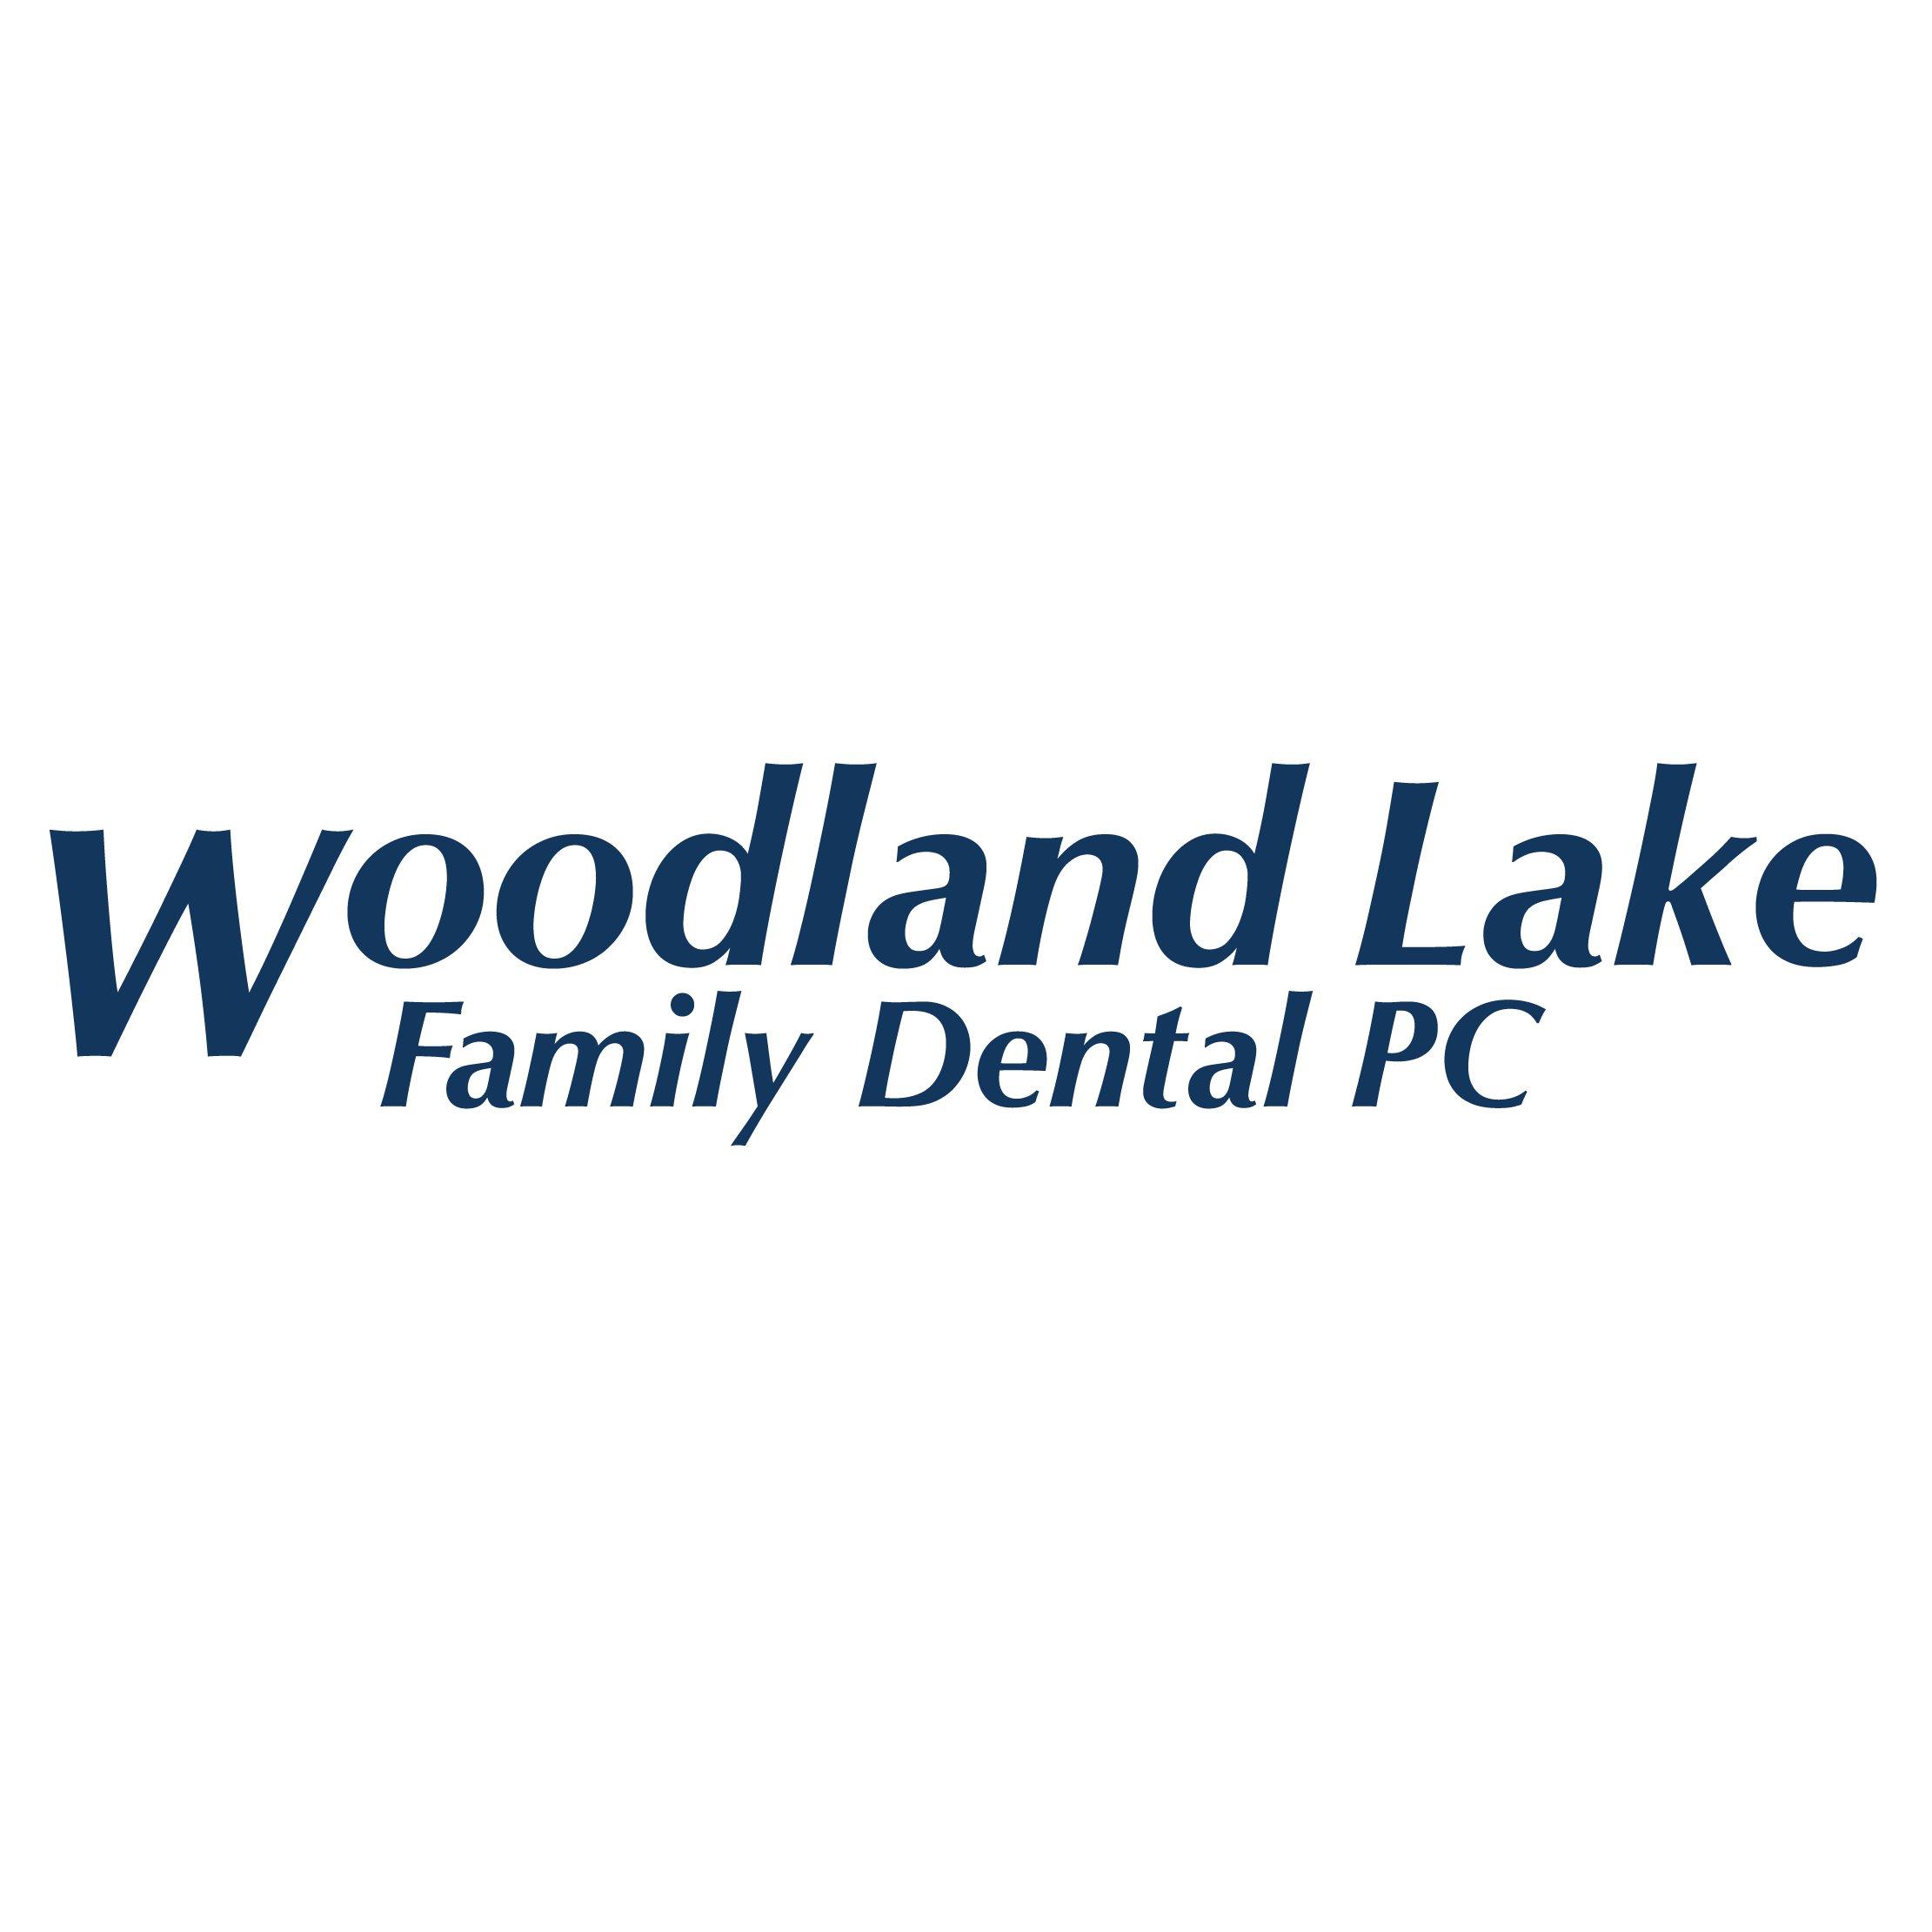 Woodland Lake Family Dental